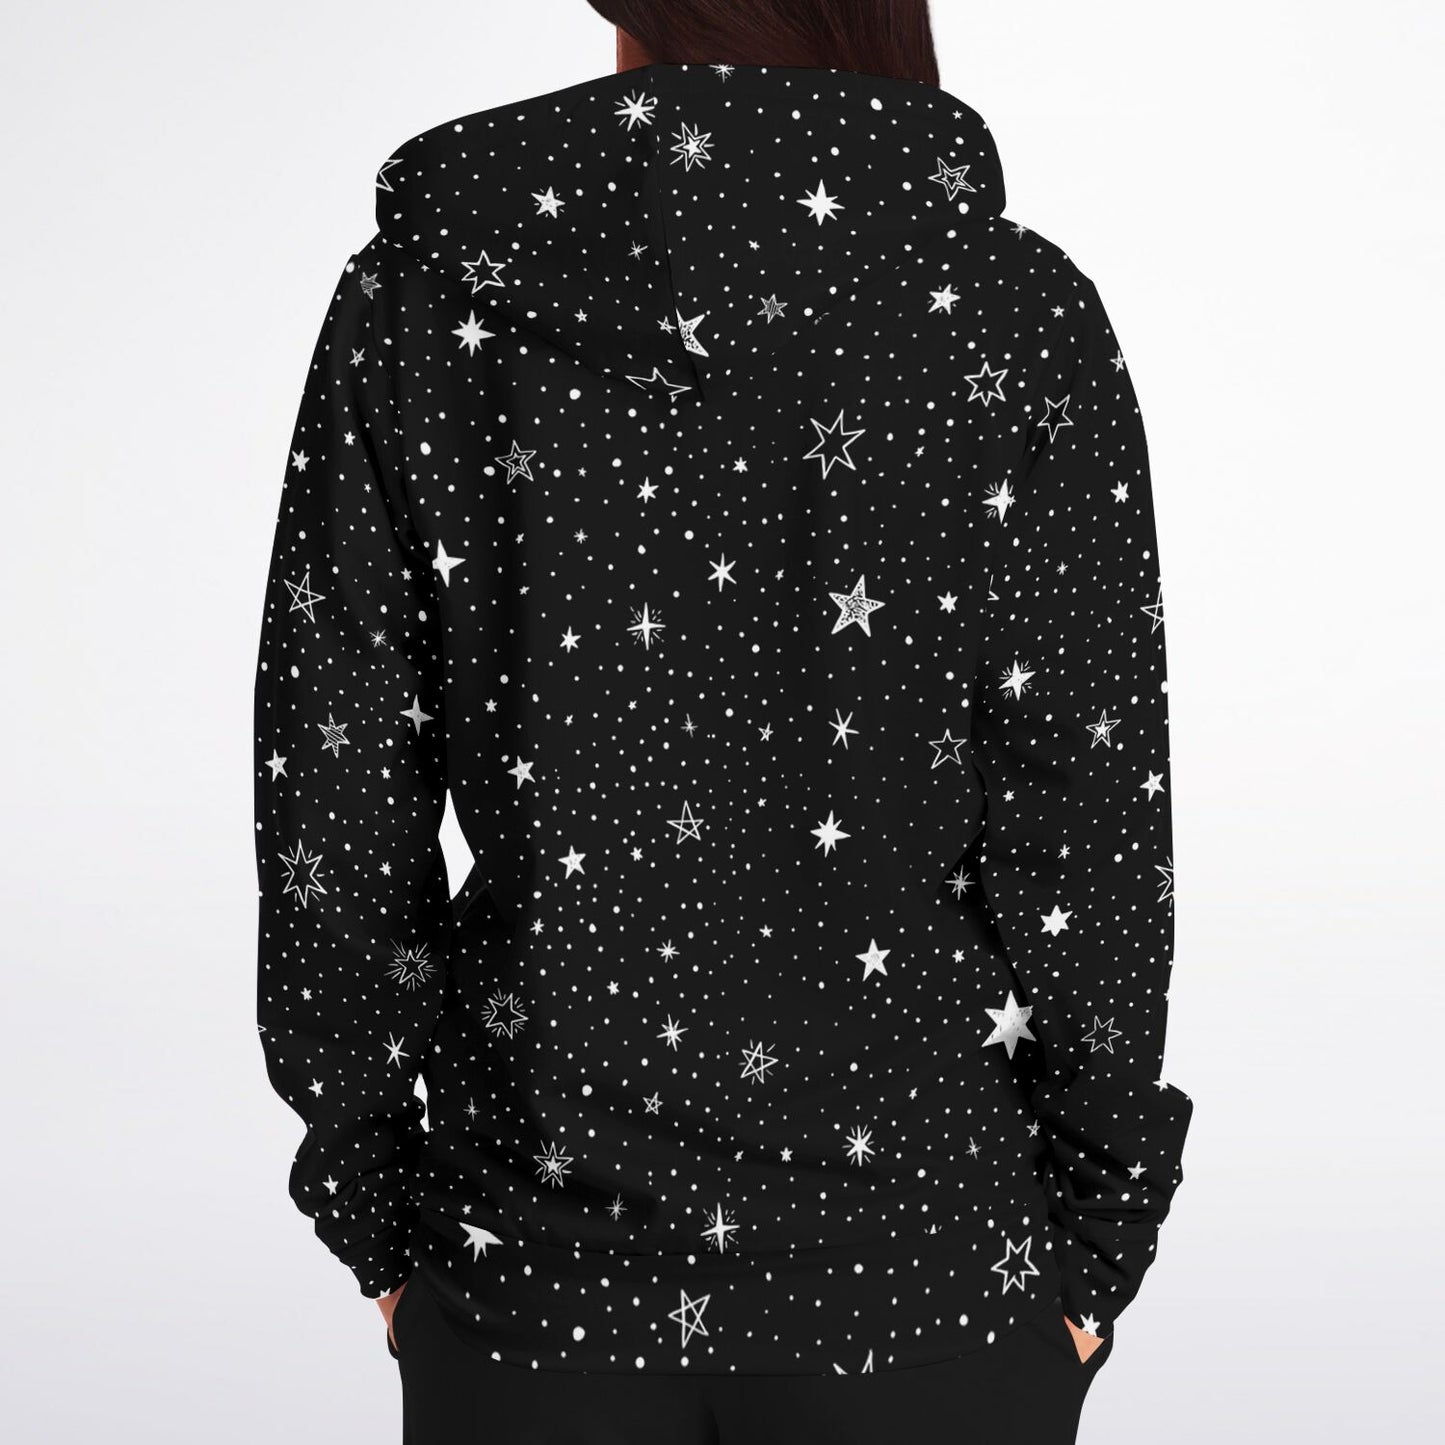 Stars Zip Up Hoodie, Black White Space Celestial Galaxy Full Zipper Pocket Men Women Unisex Ladies Graphic Cotton Fleece Hooded Sweatshirt